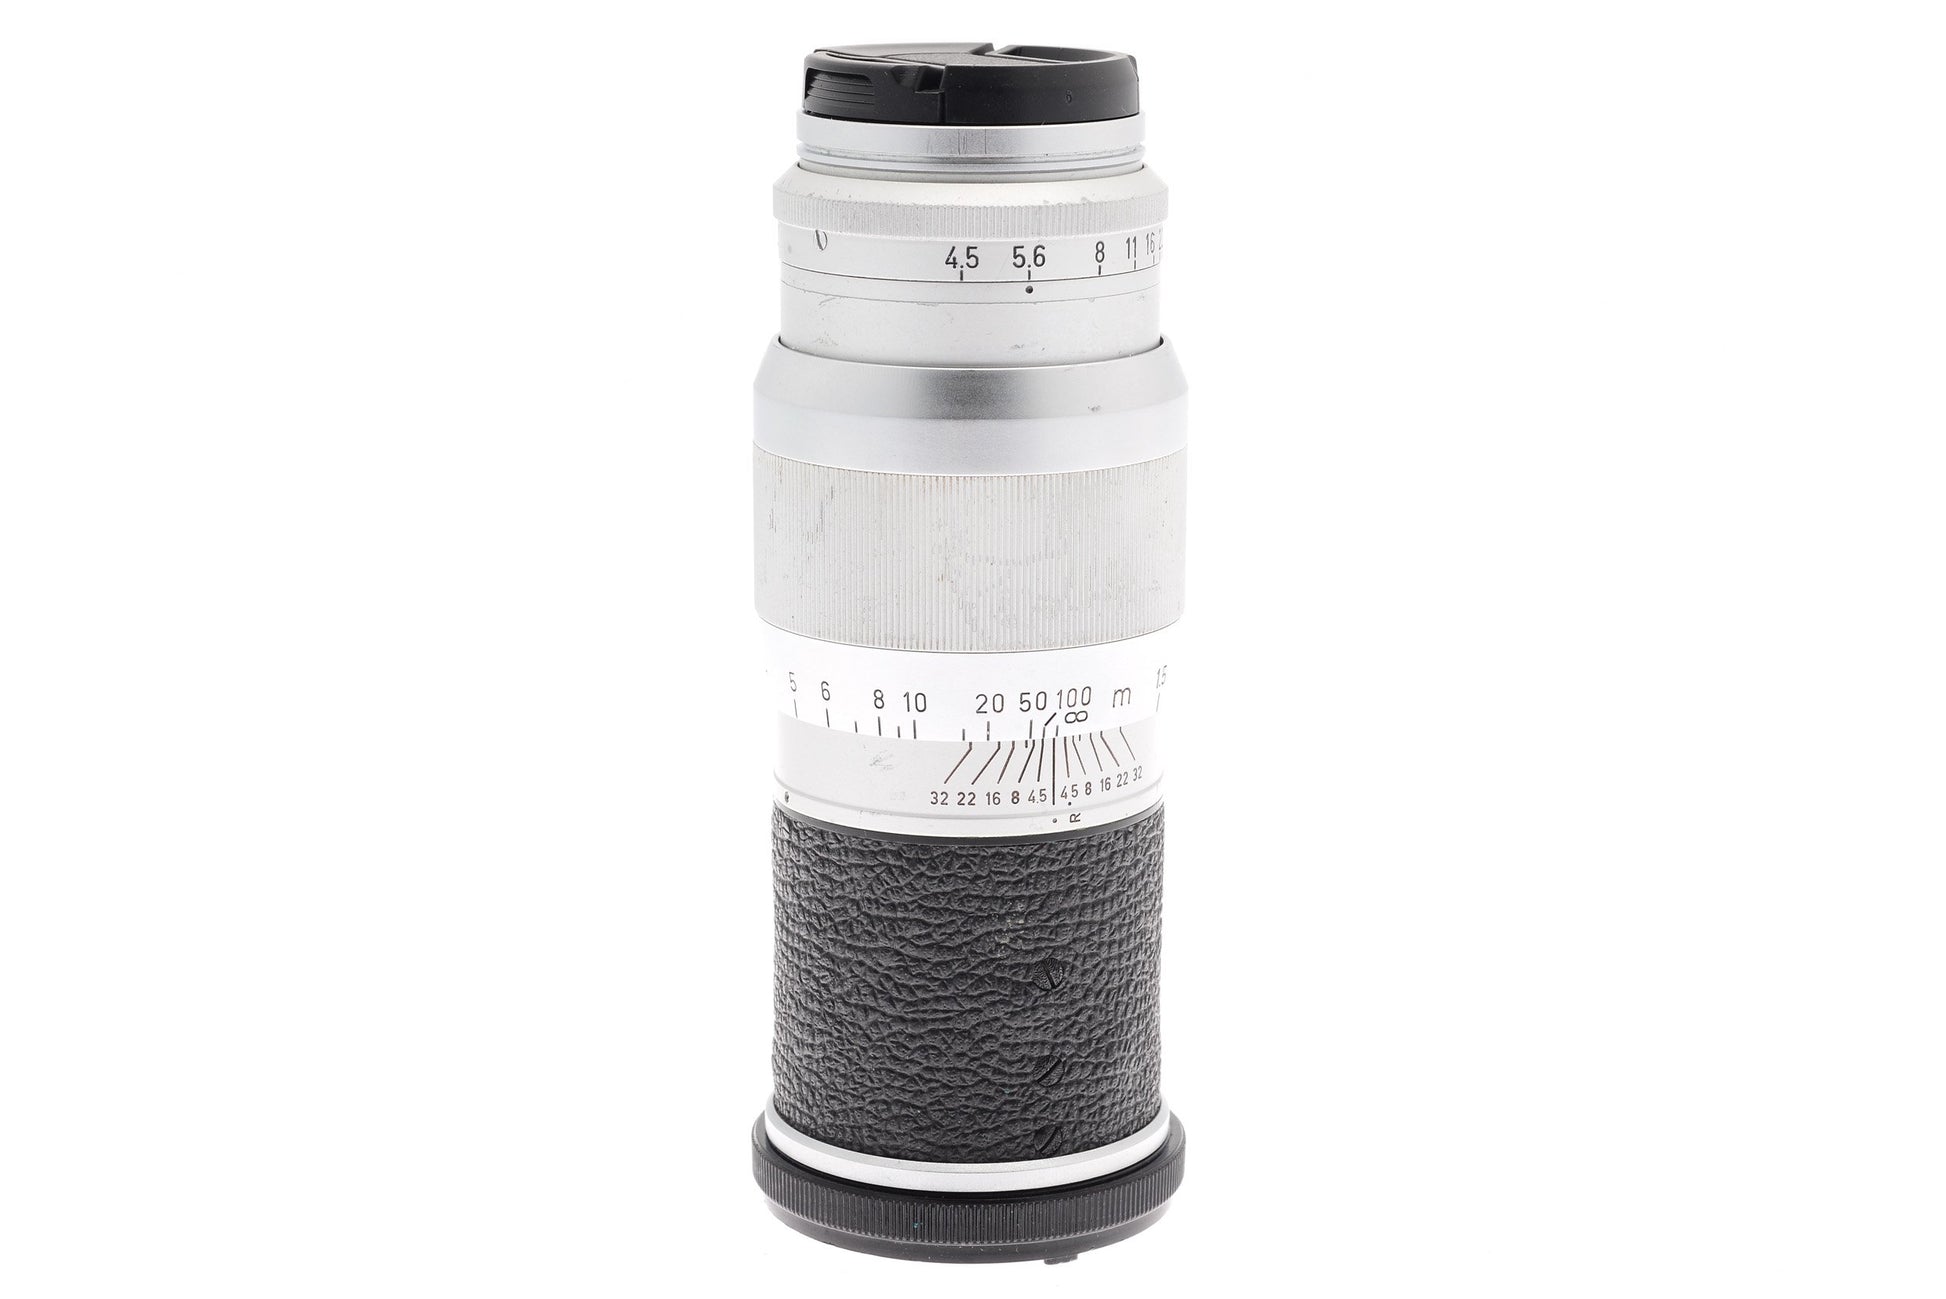 Leica 13.5cm f4.5 Hektor - Lens